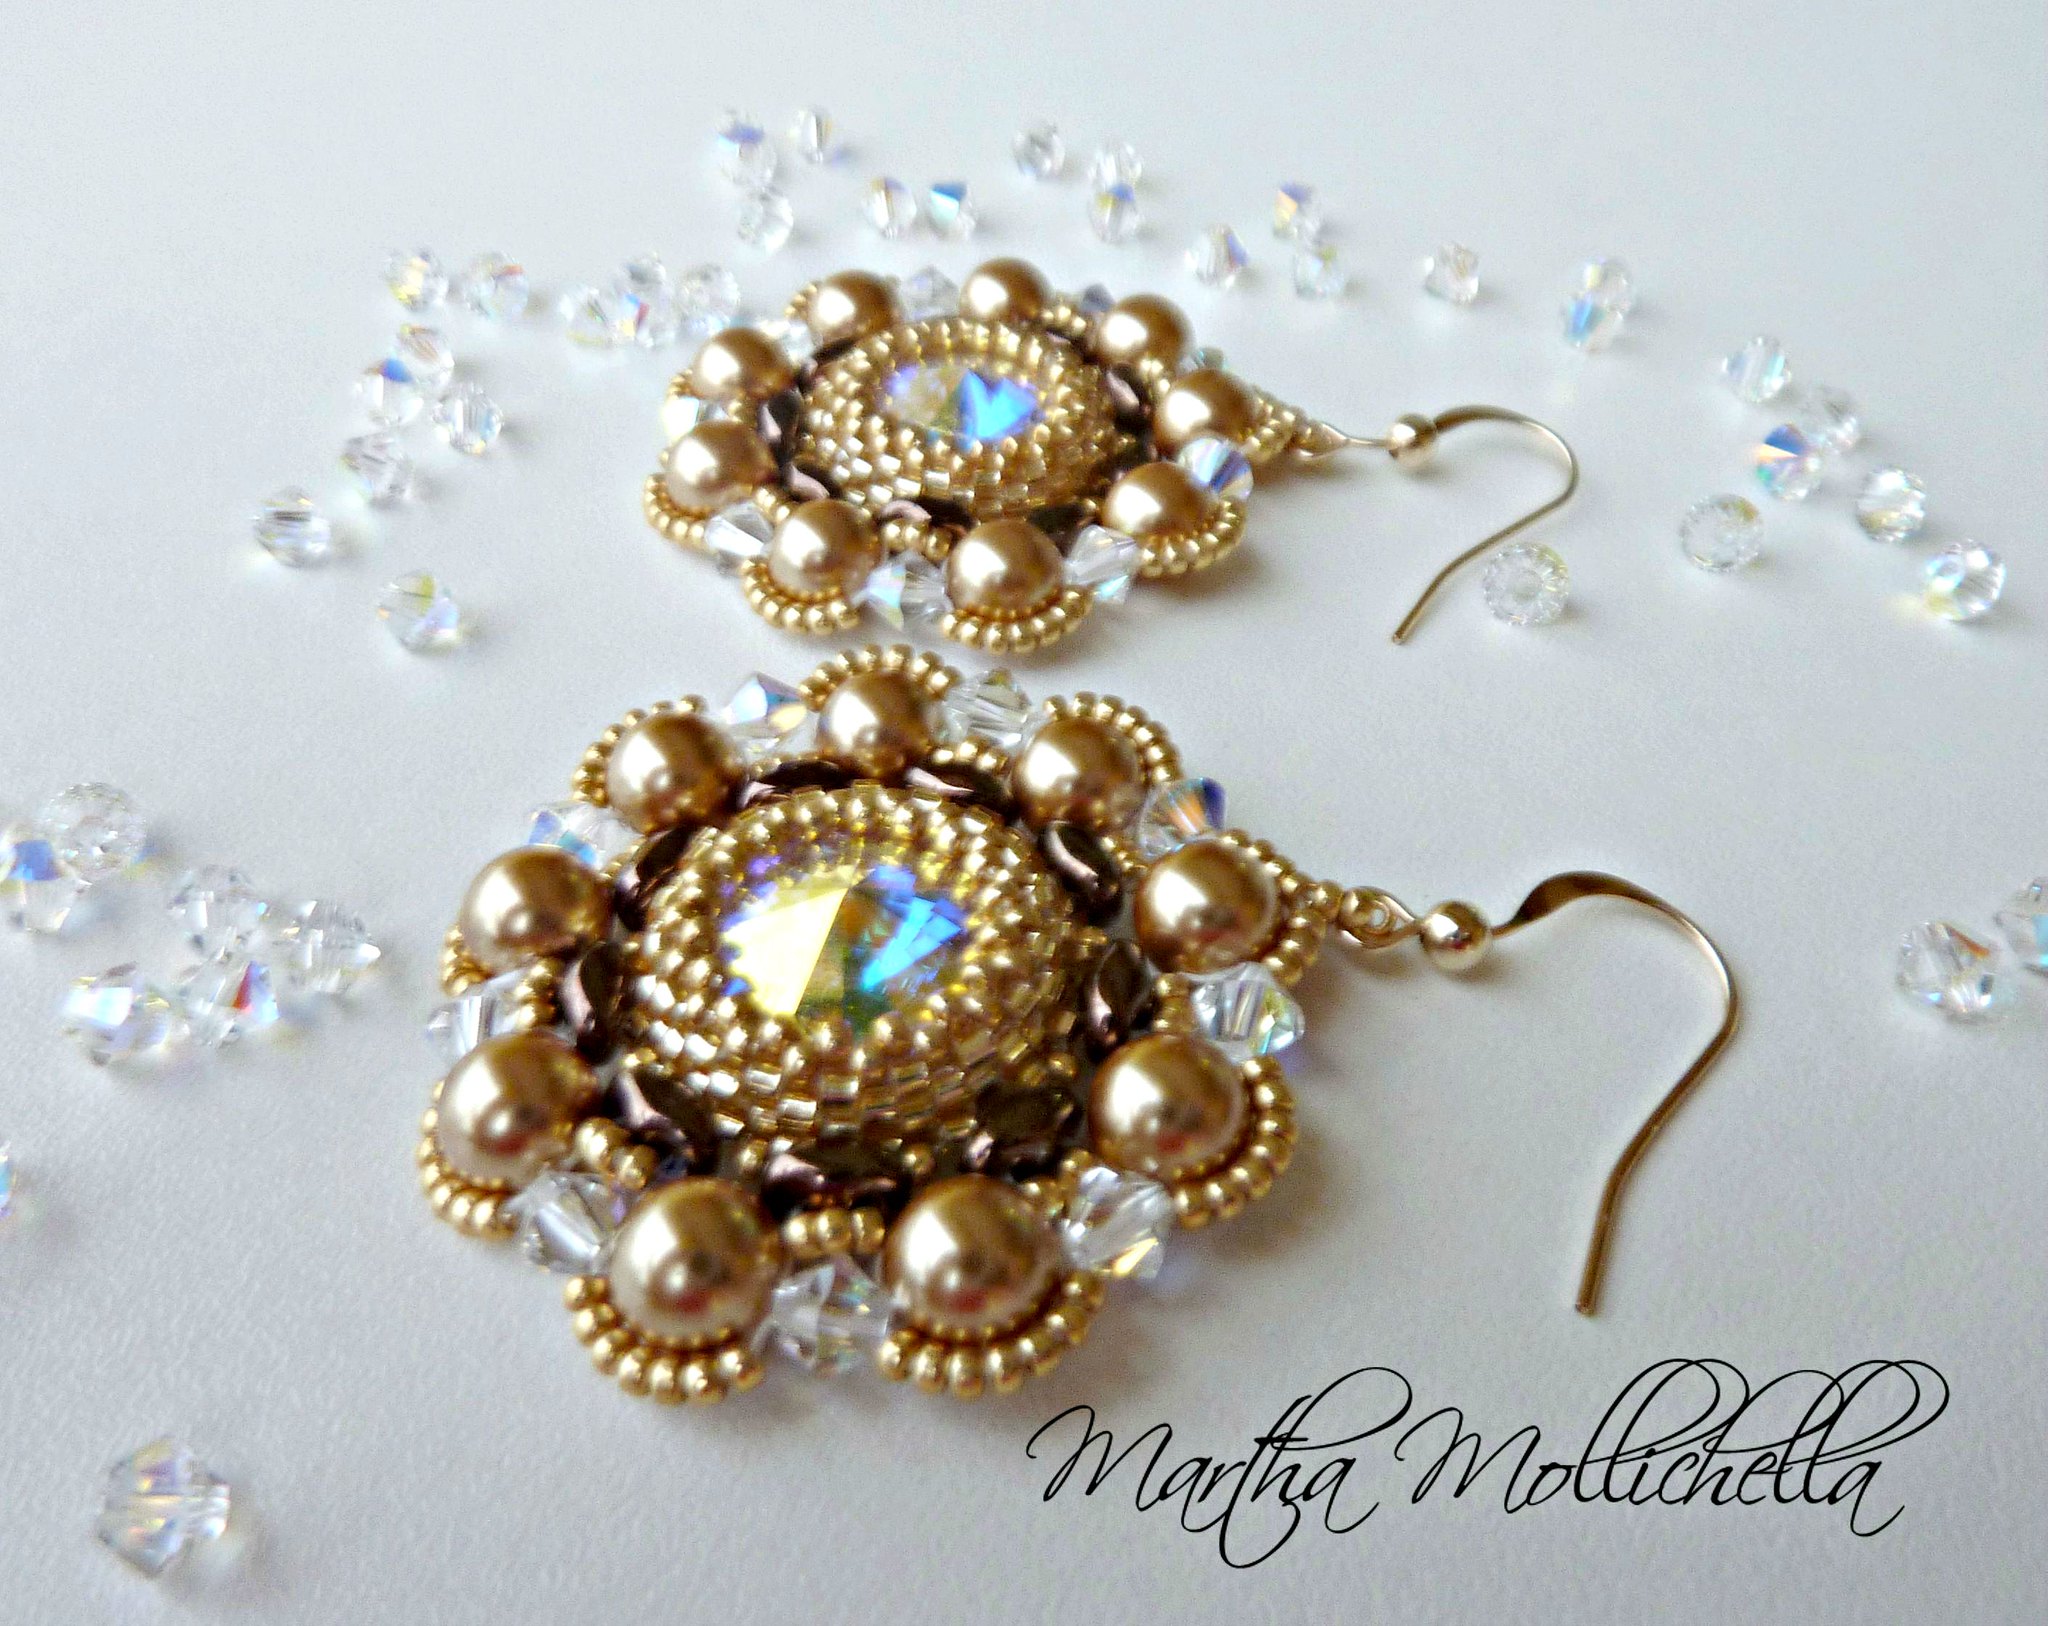 Swarovski handmade earrings with gold filled hook